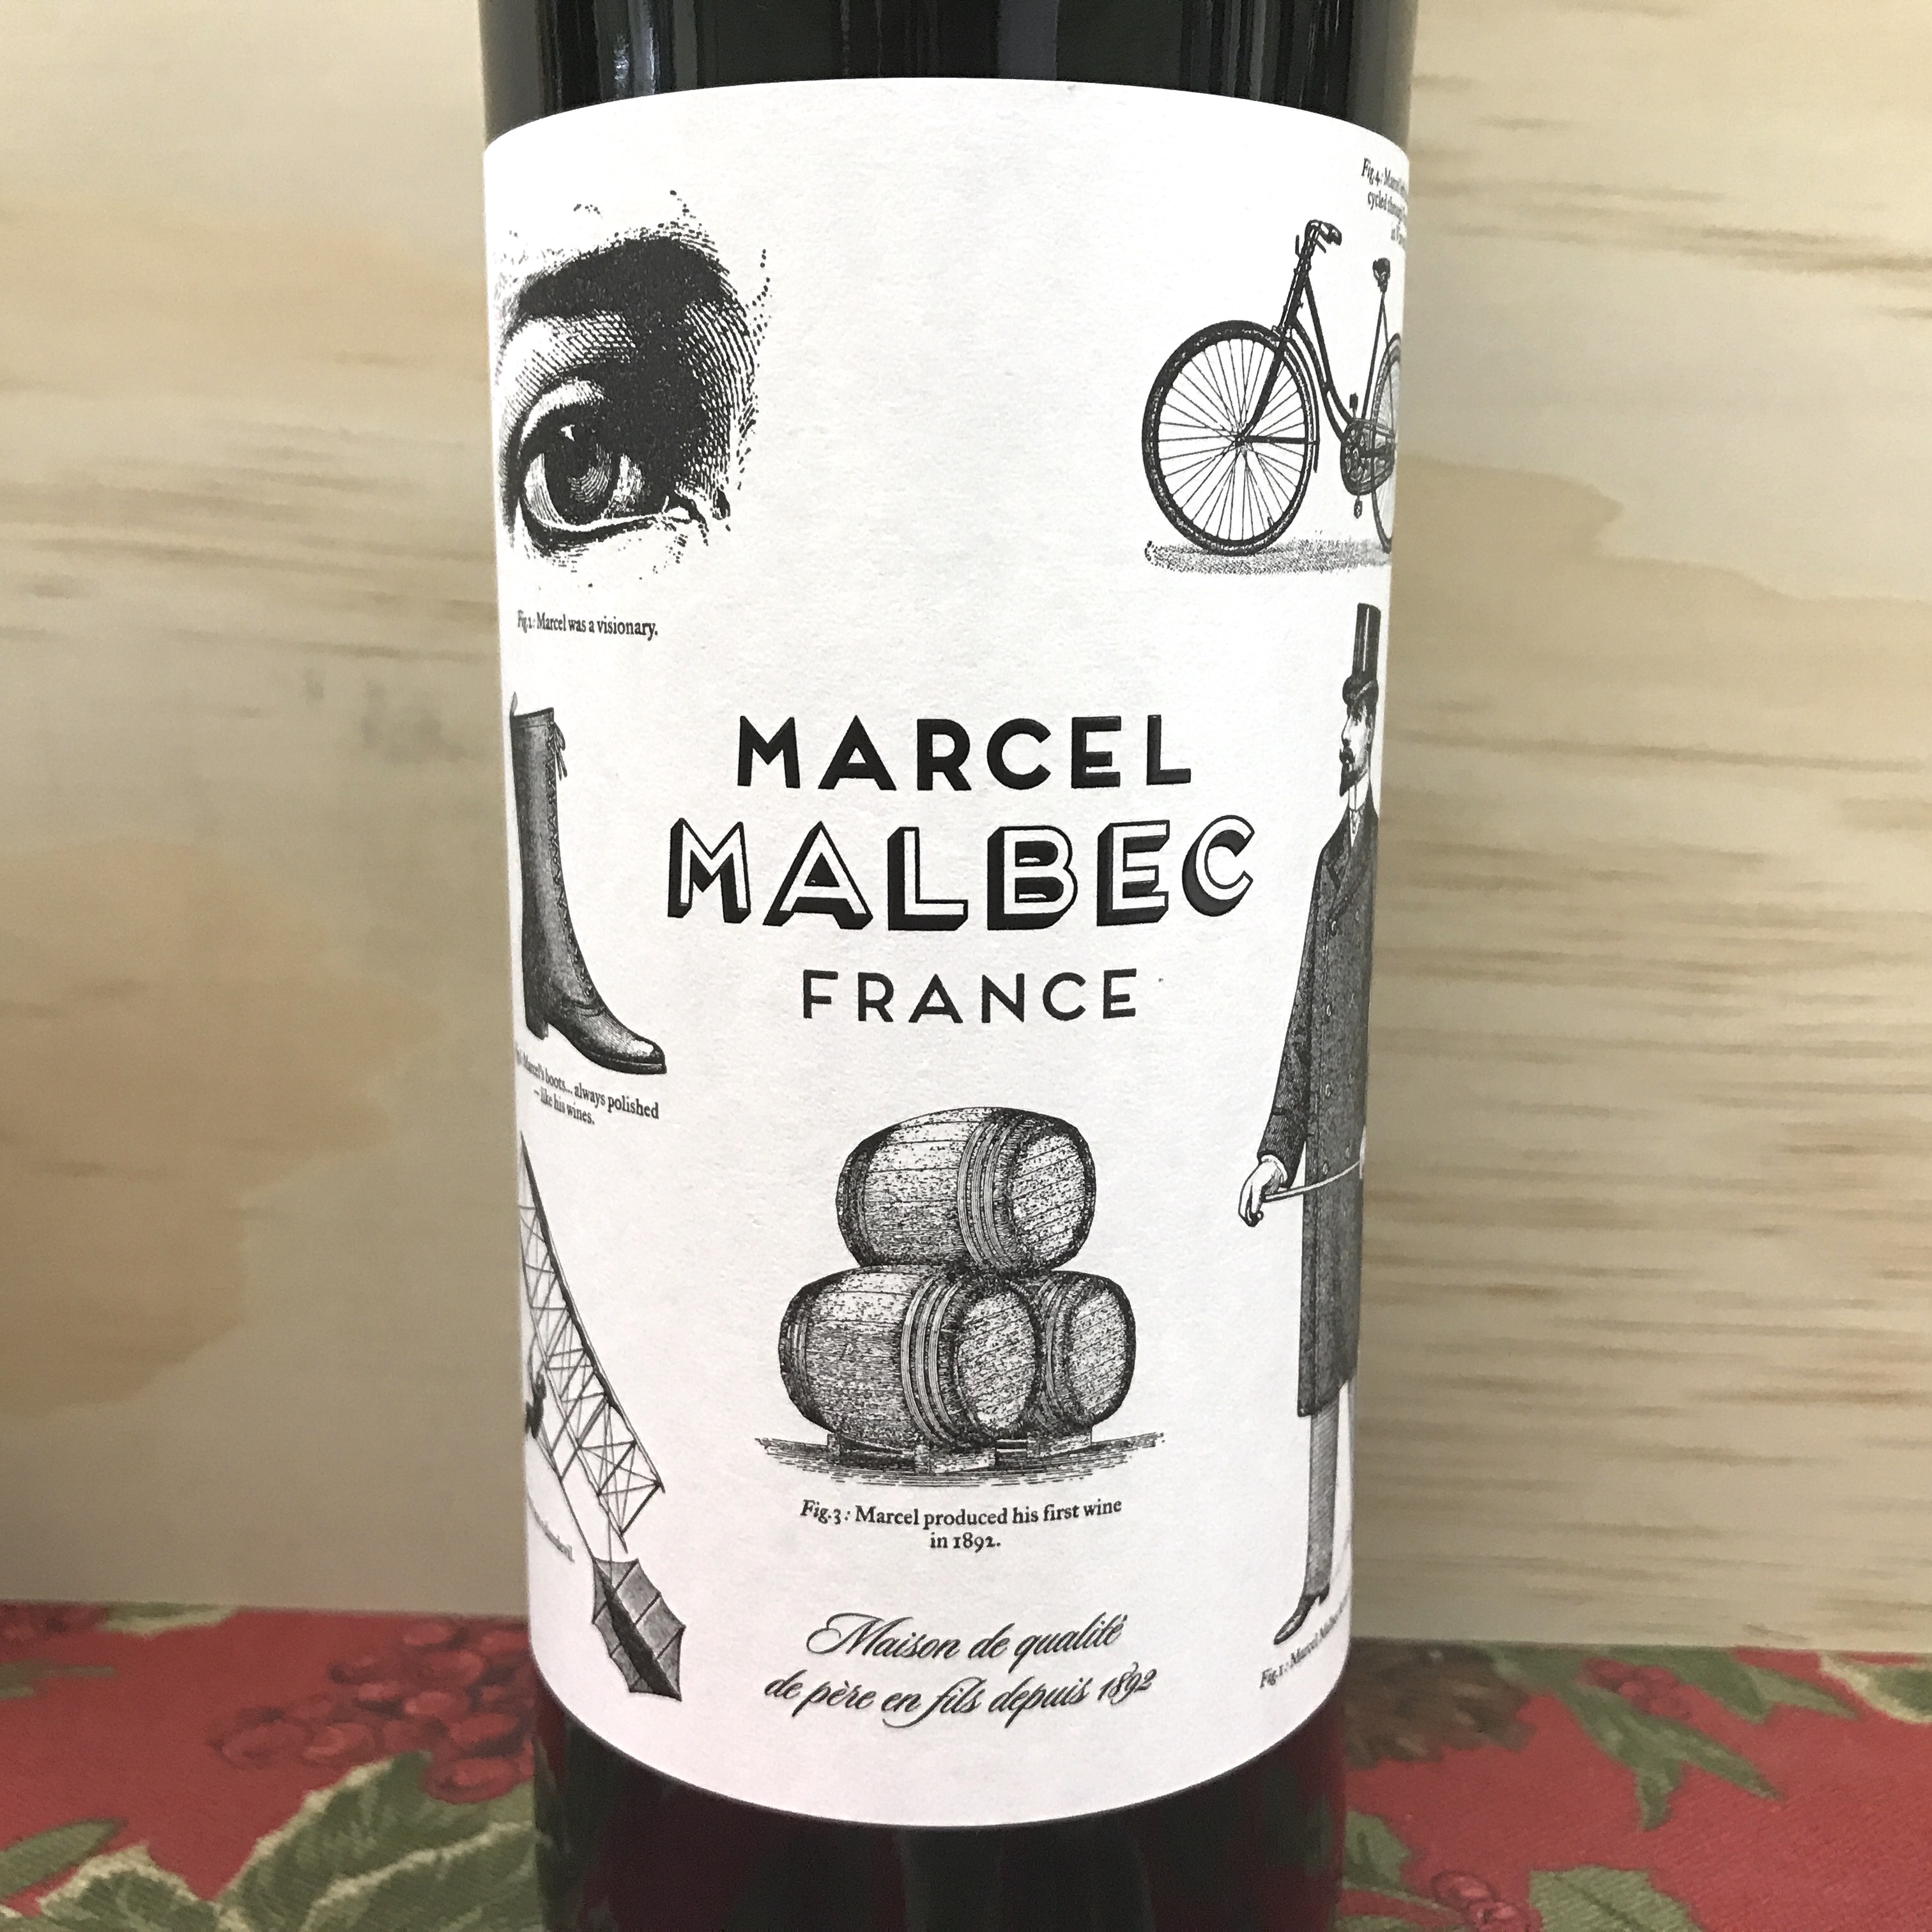 Marcel Malbec France 2018